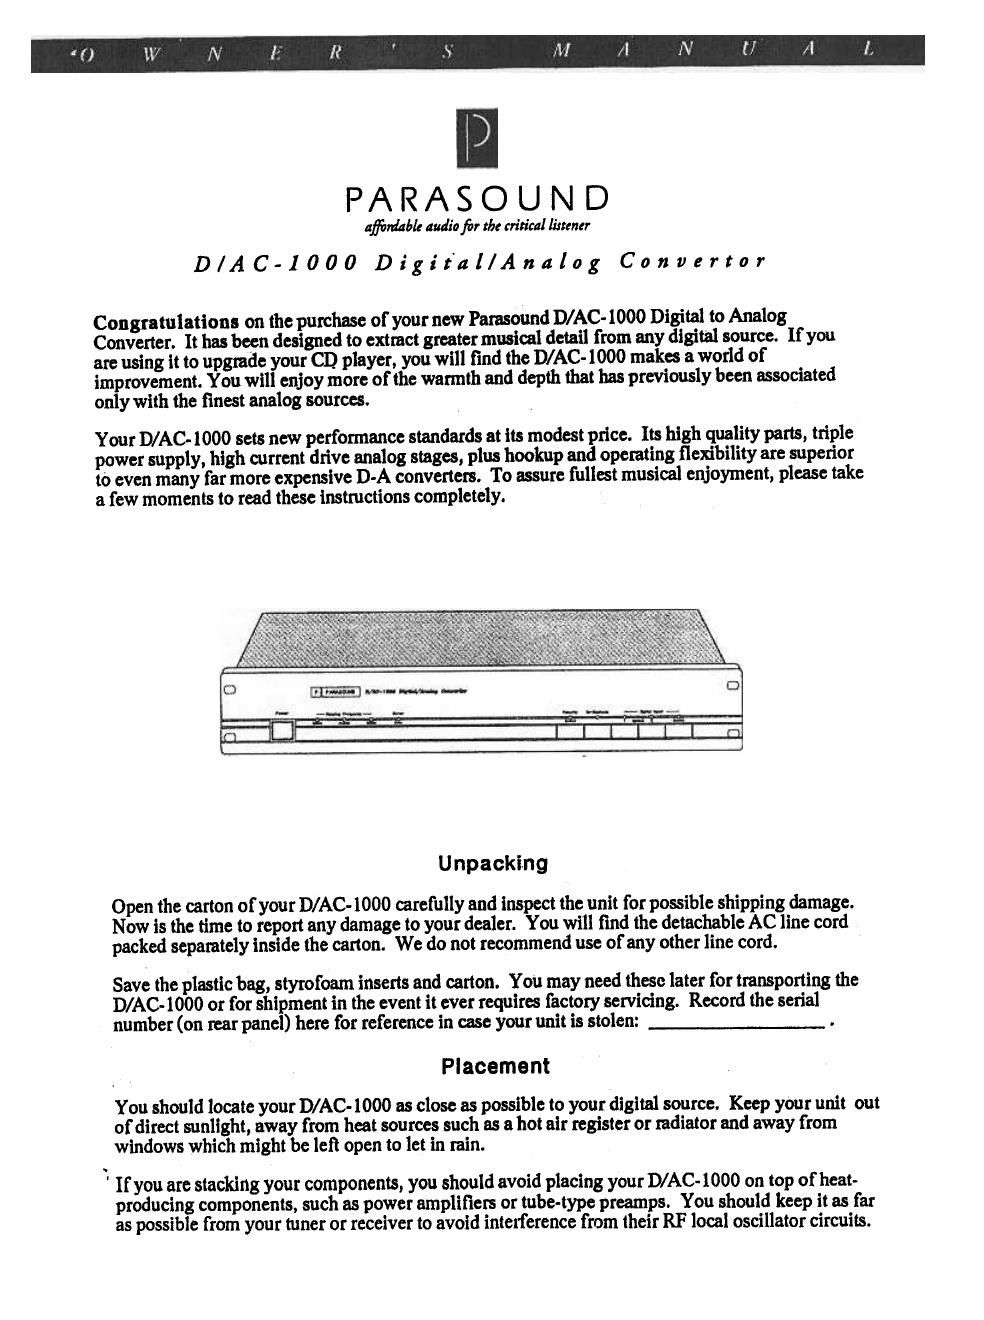 parasound dac 1000 owners manual